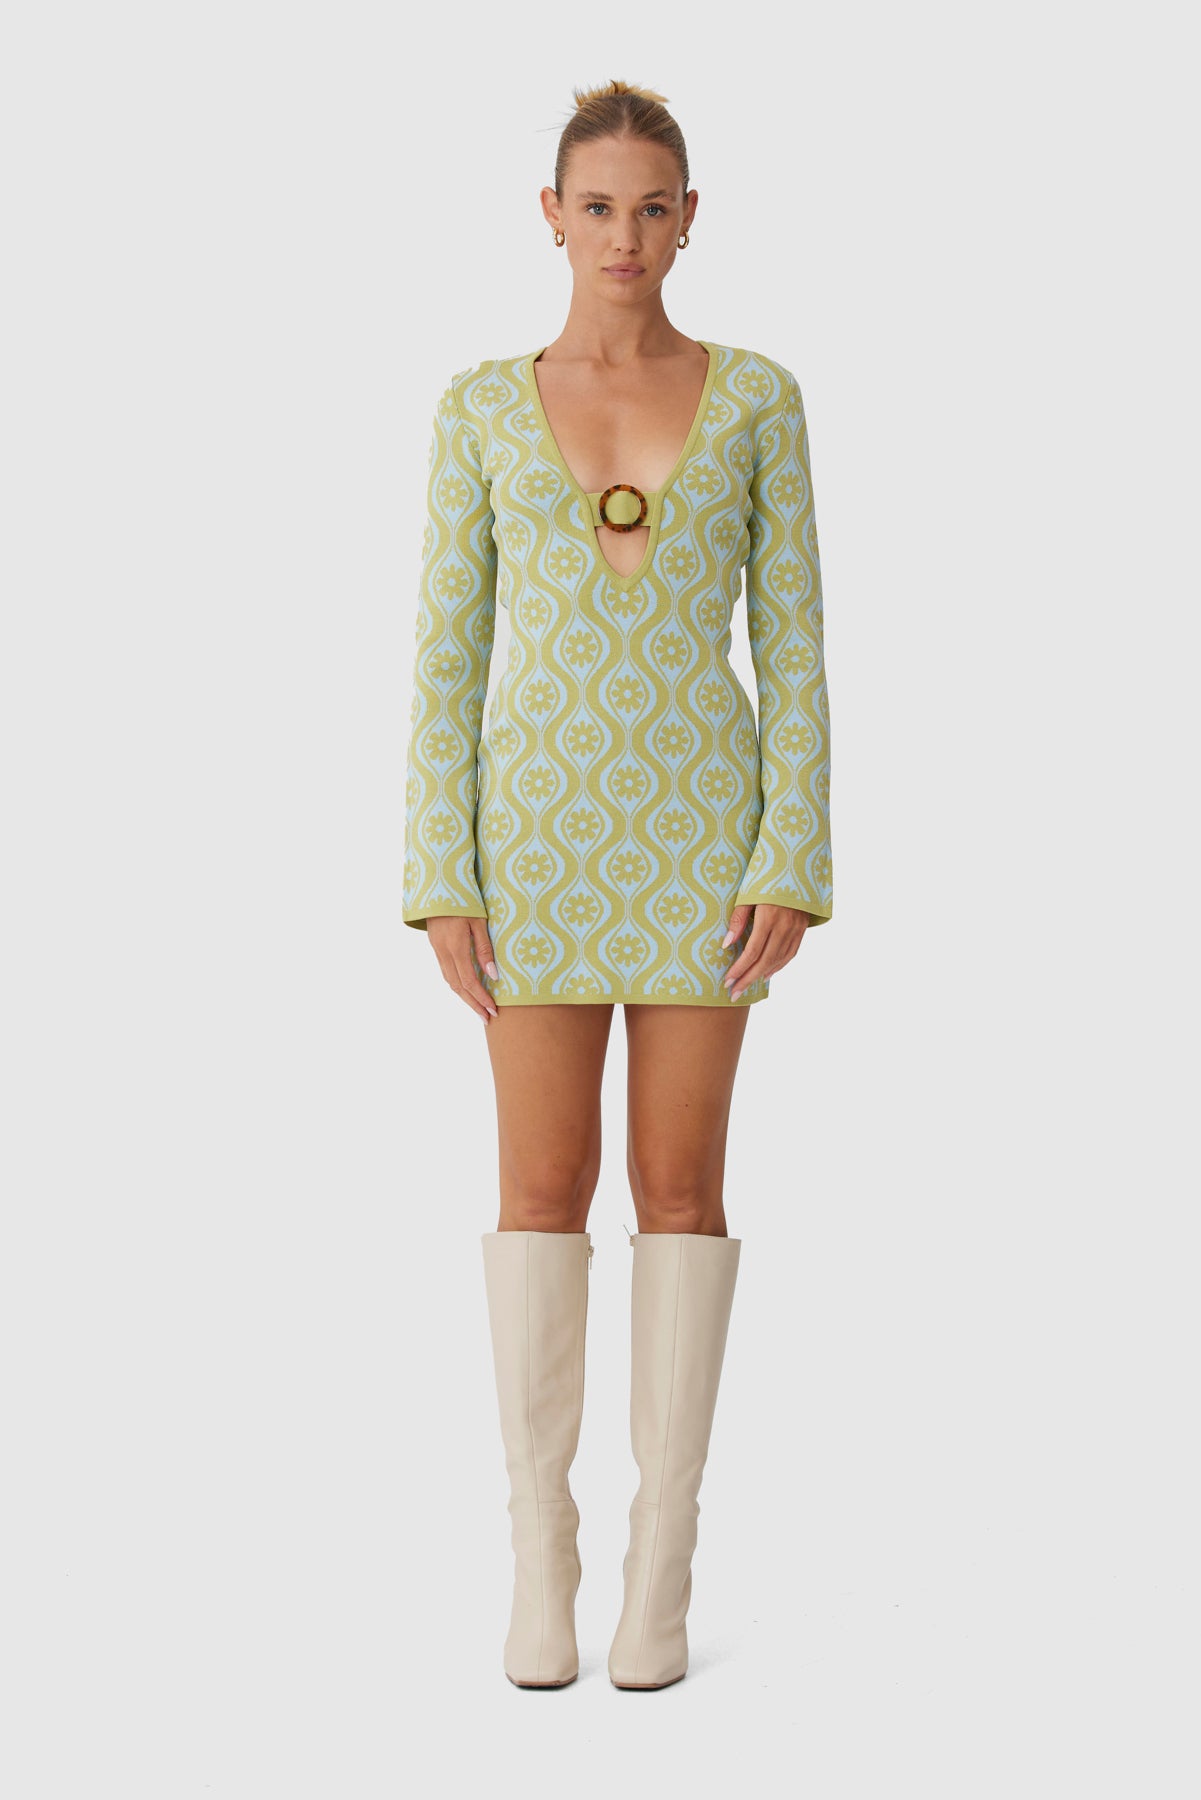 Finders - Quinn Knit Dress - Lime Retro Floral